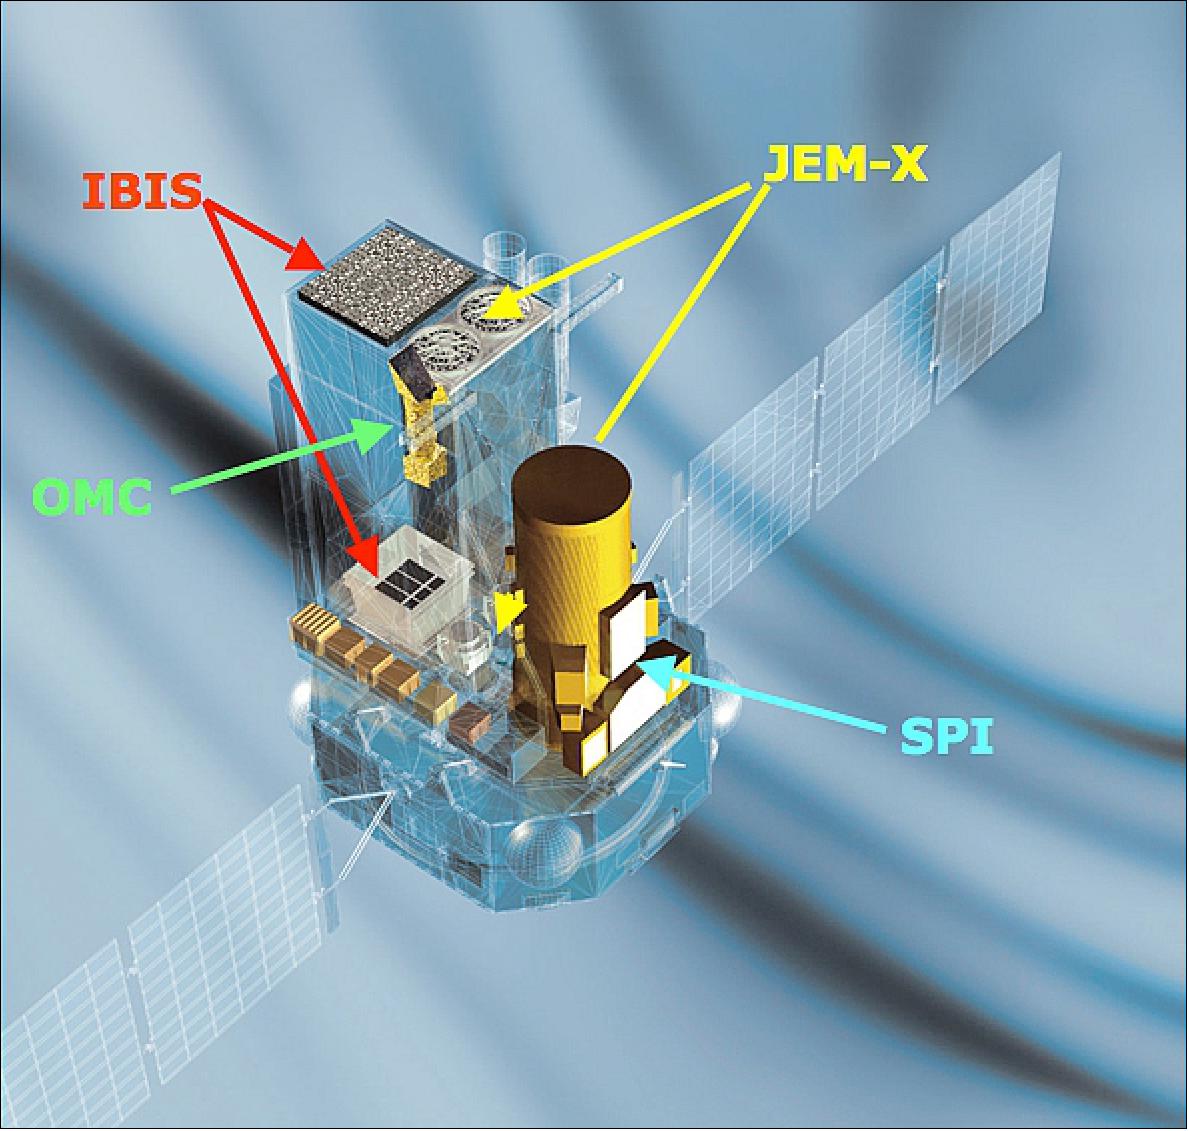 Figure 56: Location of instrumentation on the INTEGRAL spacecraft (image credit: ESA)